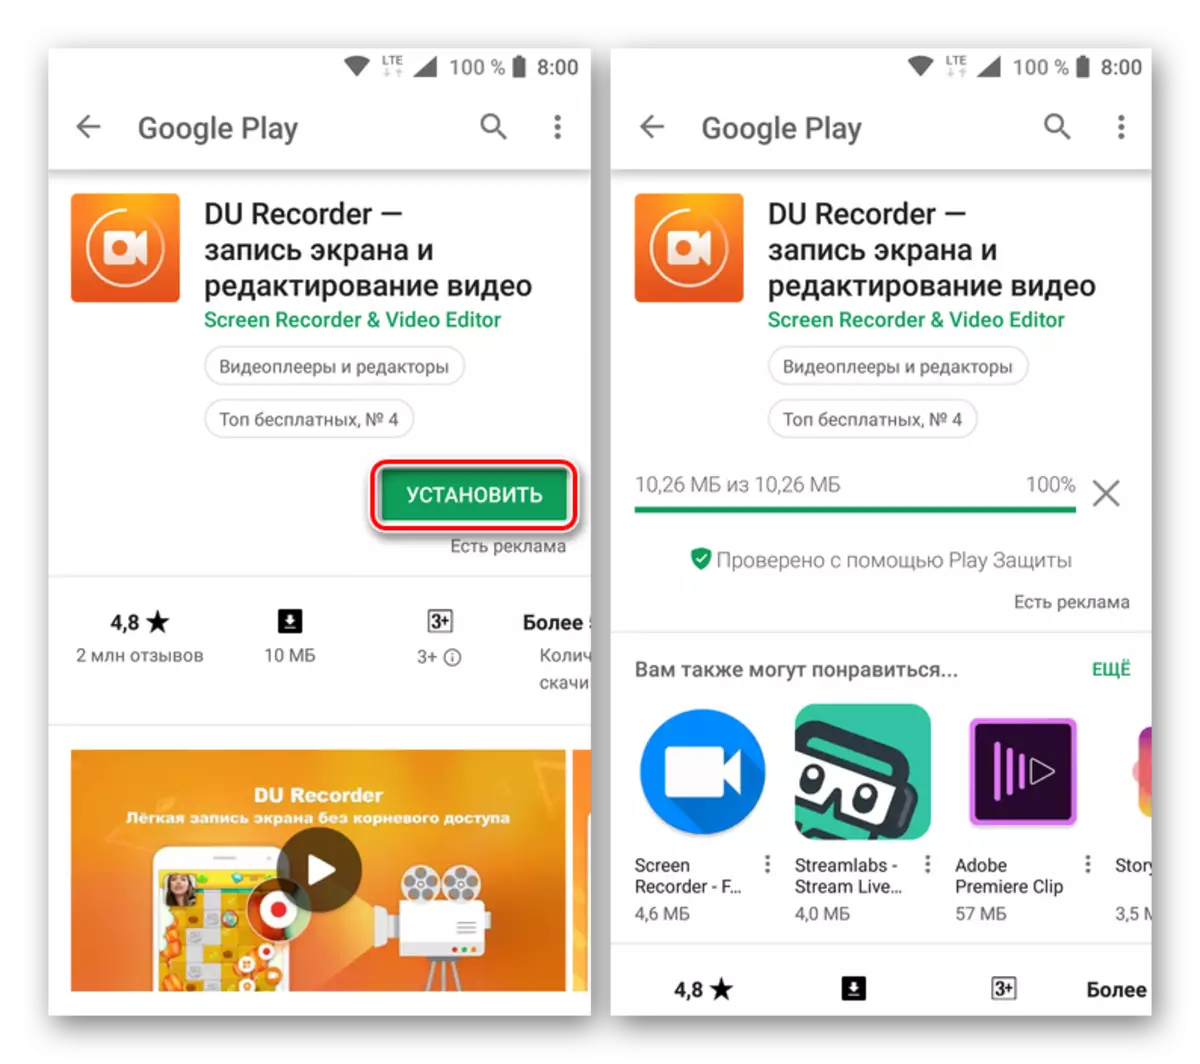 Pag-instalar sa Aplikasyon sa Du Recorder alang sa Android gikan sa Google Play Market